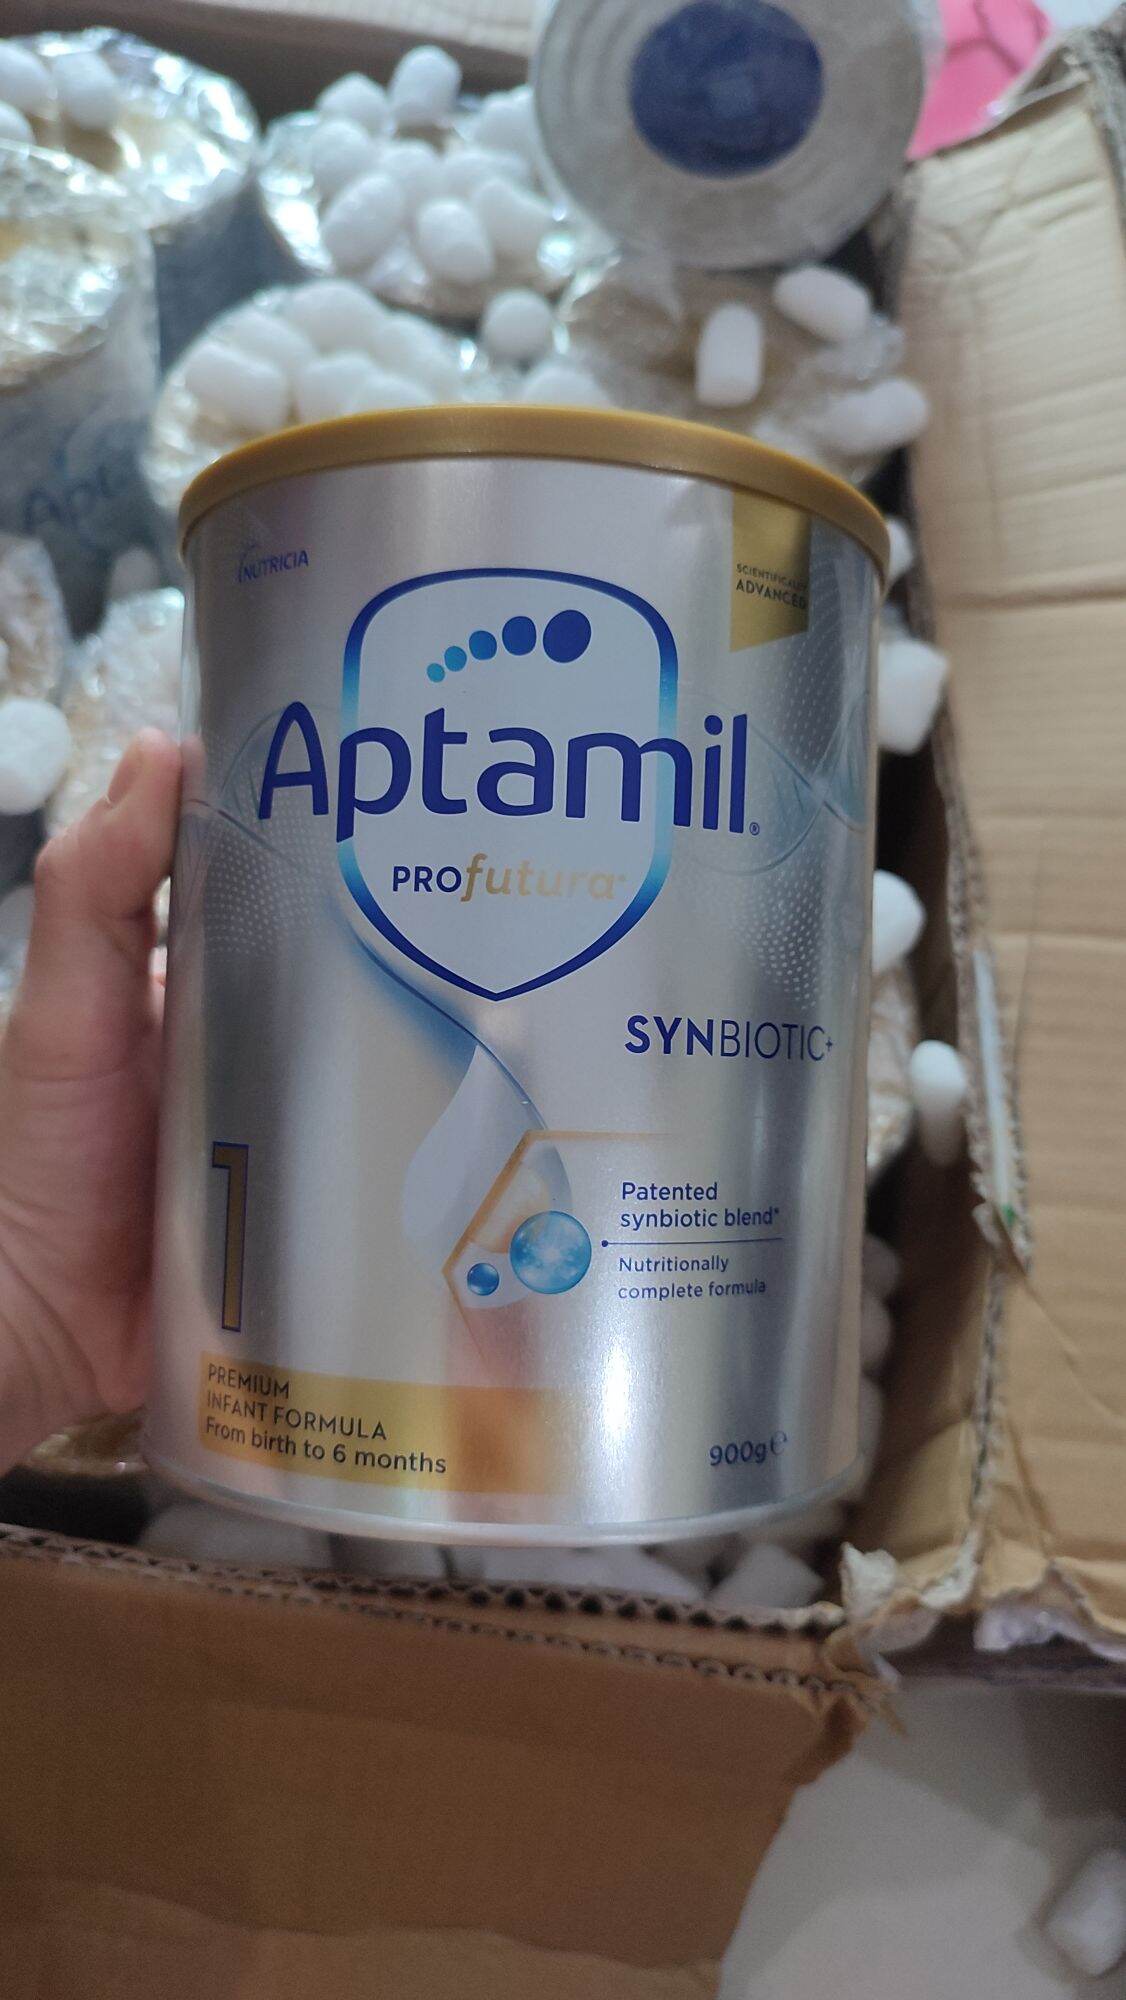 [HCM]Sữa Aptamil profutura úc mẫu mới số 1 2 3 4